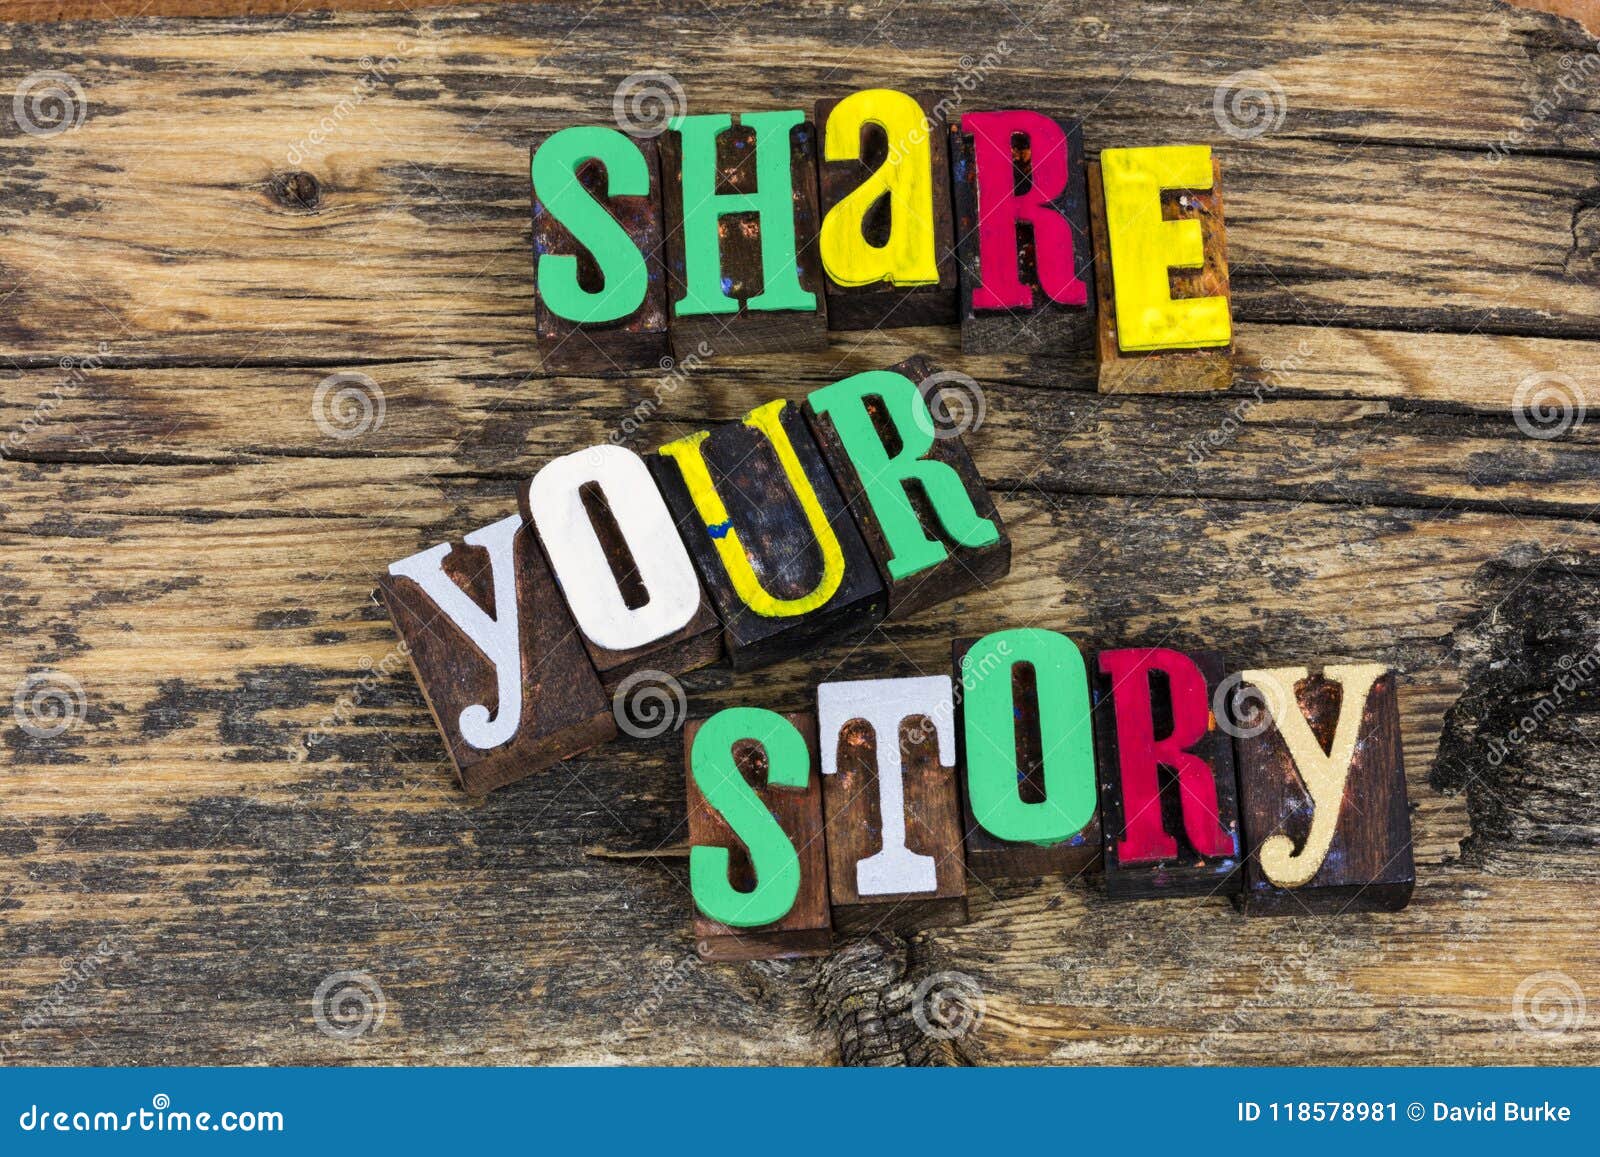 share book story storytelling life history storyteller wisdom